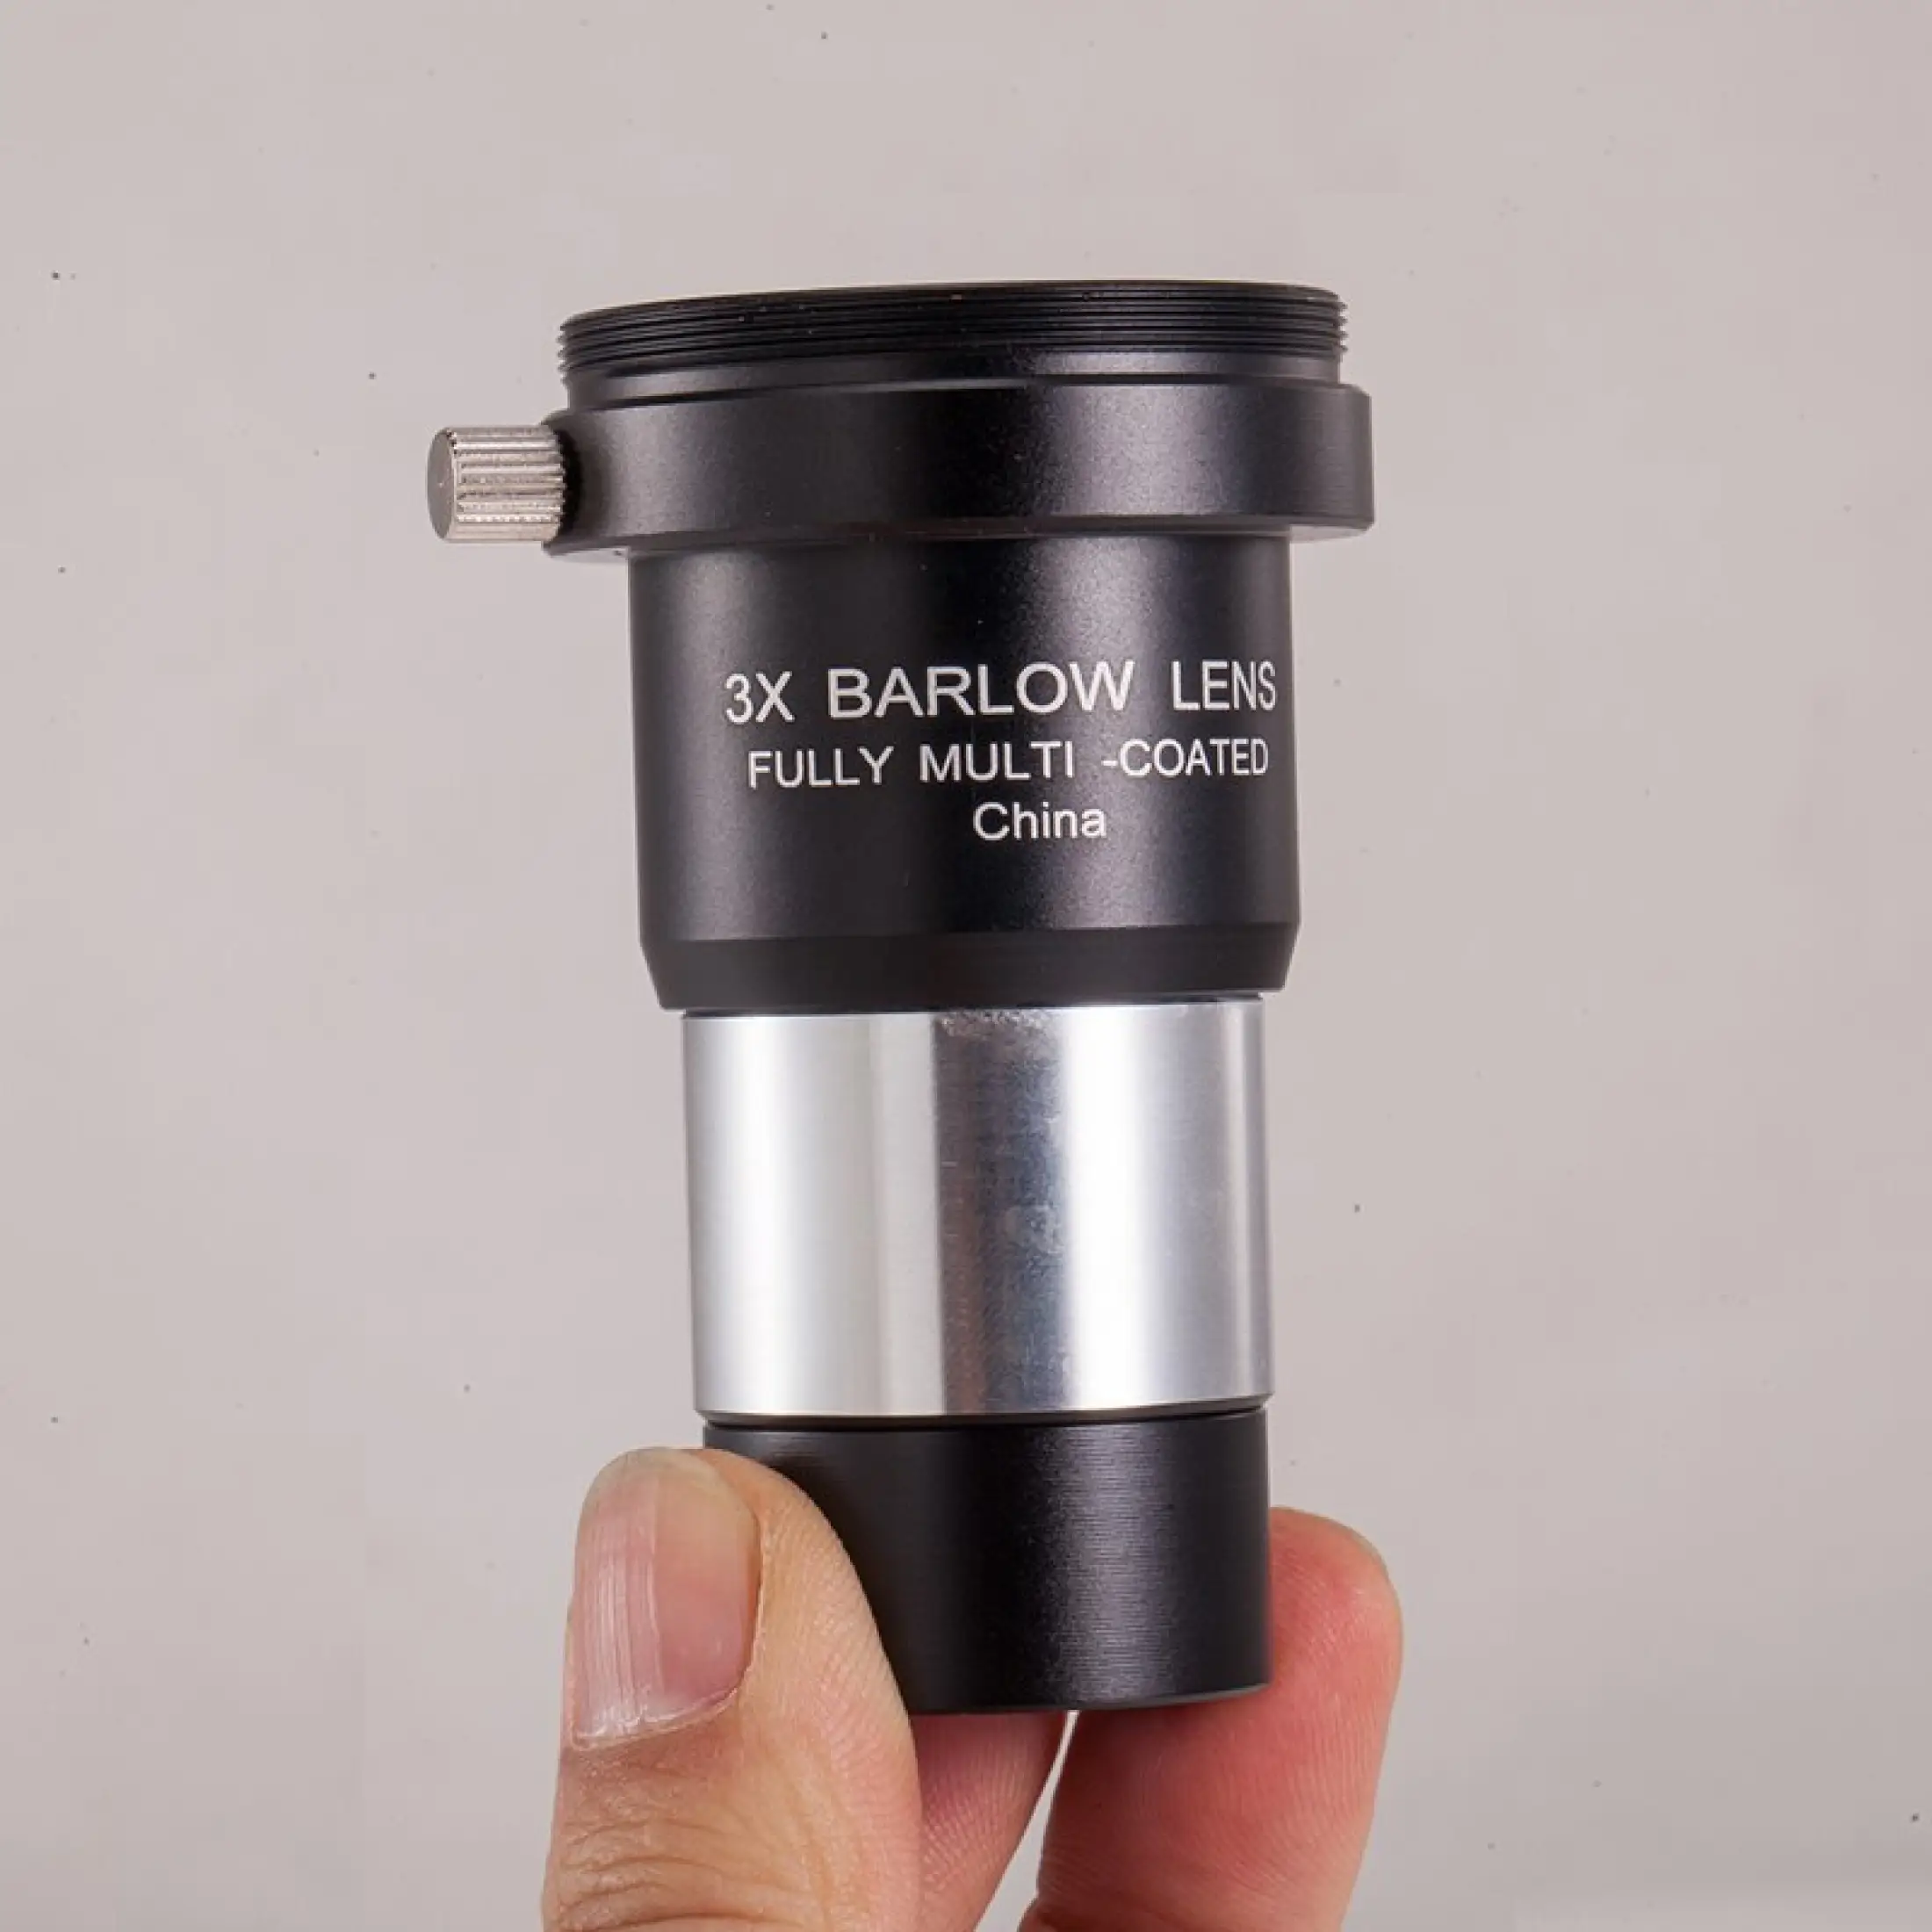 Barlow Lens 3X Fully Multi-coated Telescope Eyepiece Astronomy Accessory M42